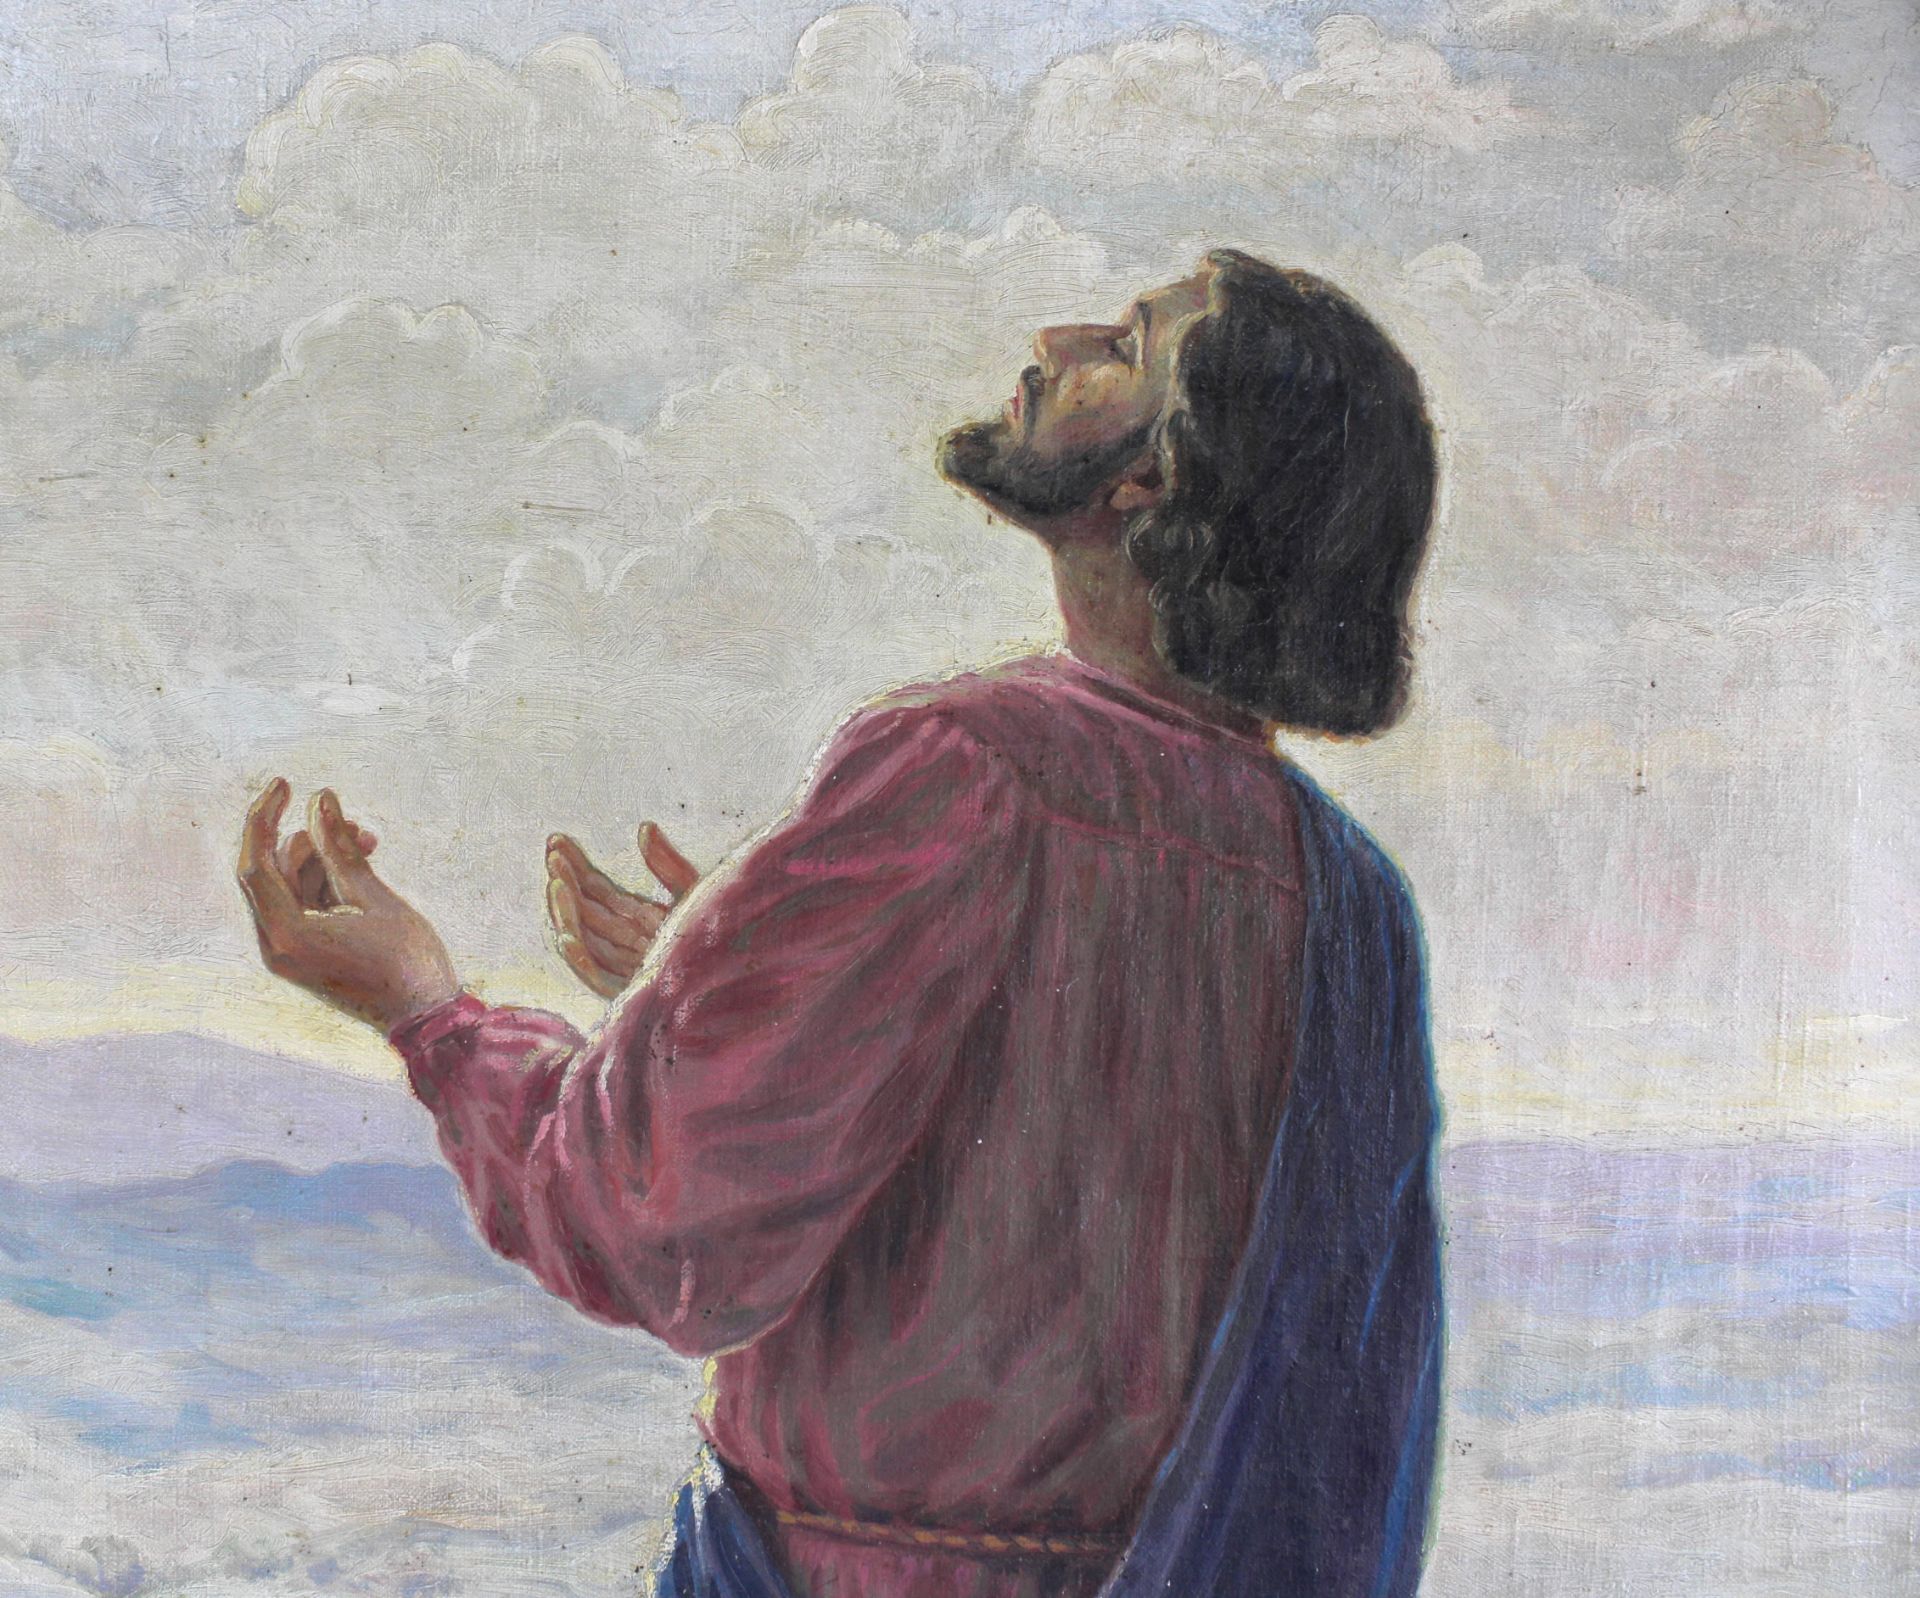 Vladimir Zlamal, Tschechei 20.Jh. "Jesus auf dem Berg" Öl/Leinwand, sig. u. dat. 1935, 106 x 80 cm - Bild 4 aus 5